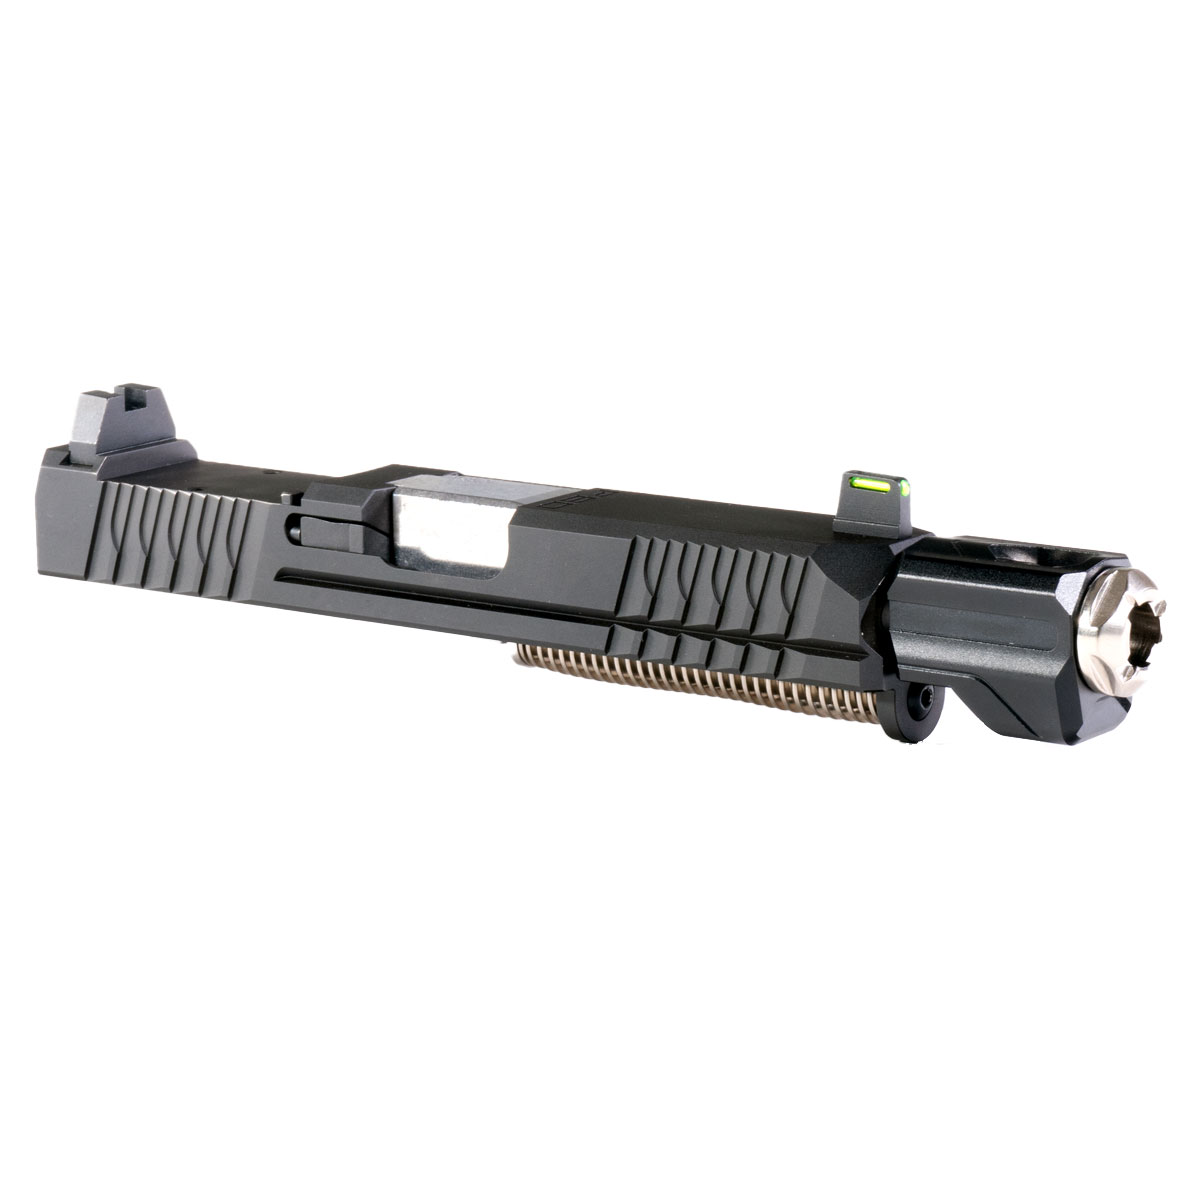 DTT 'Iron Fist' 9mm Complete Slide Kit - Glock 19 Gen 1-3 Compatible